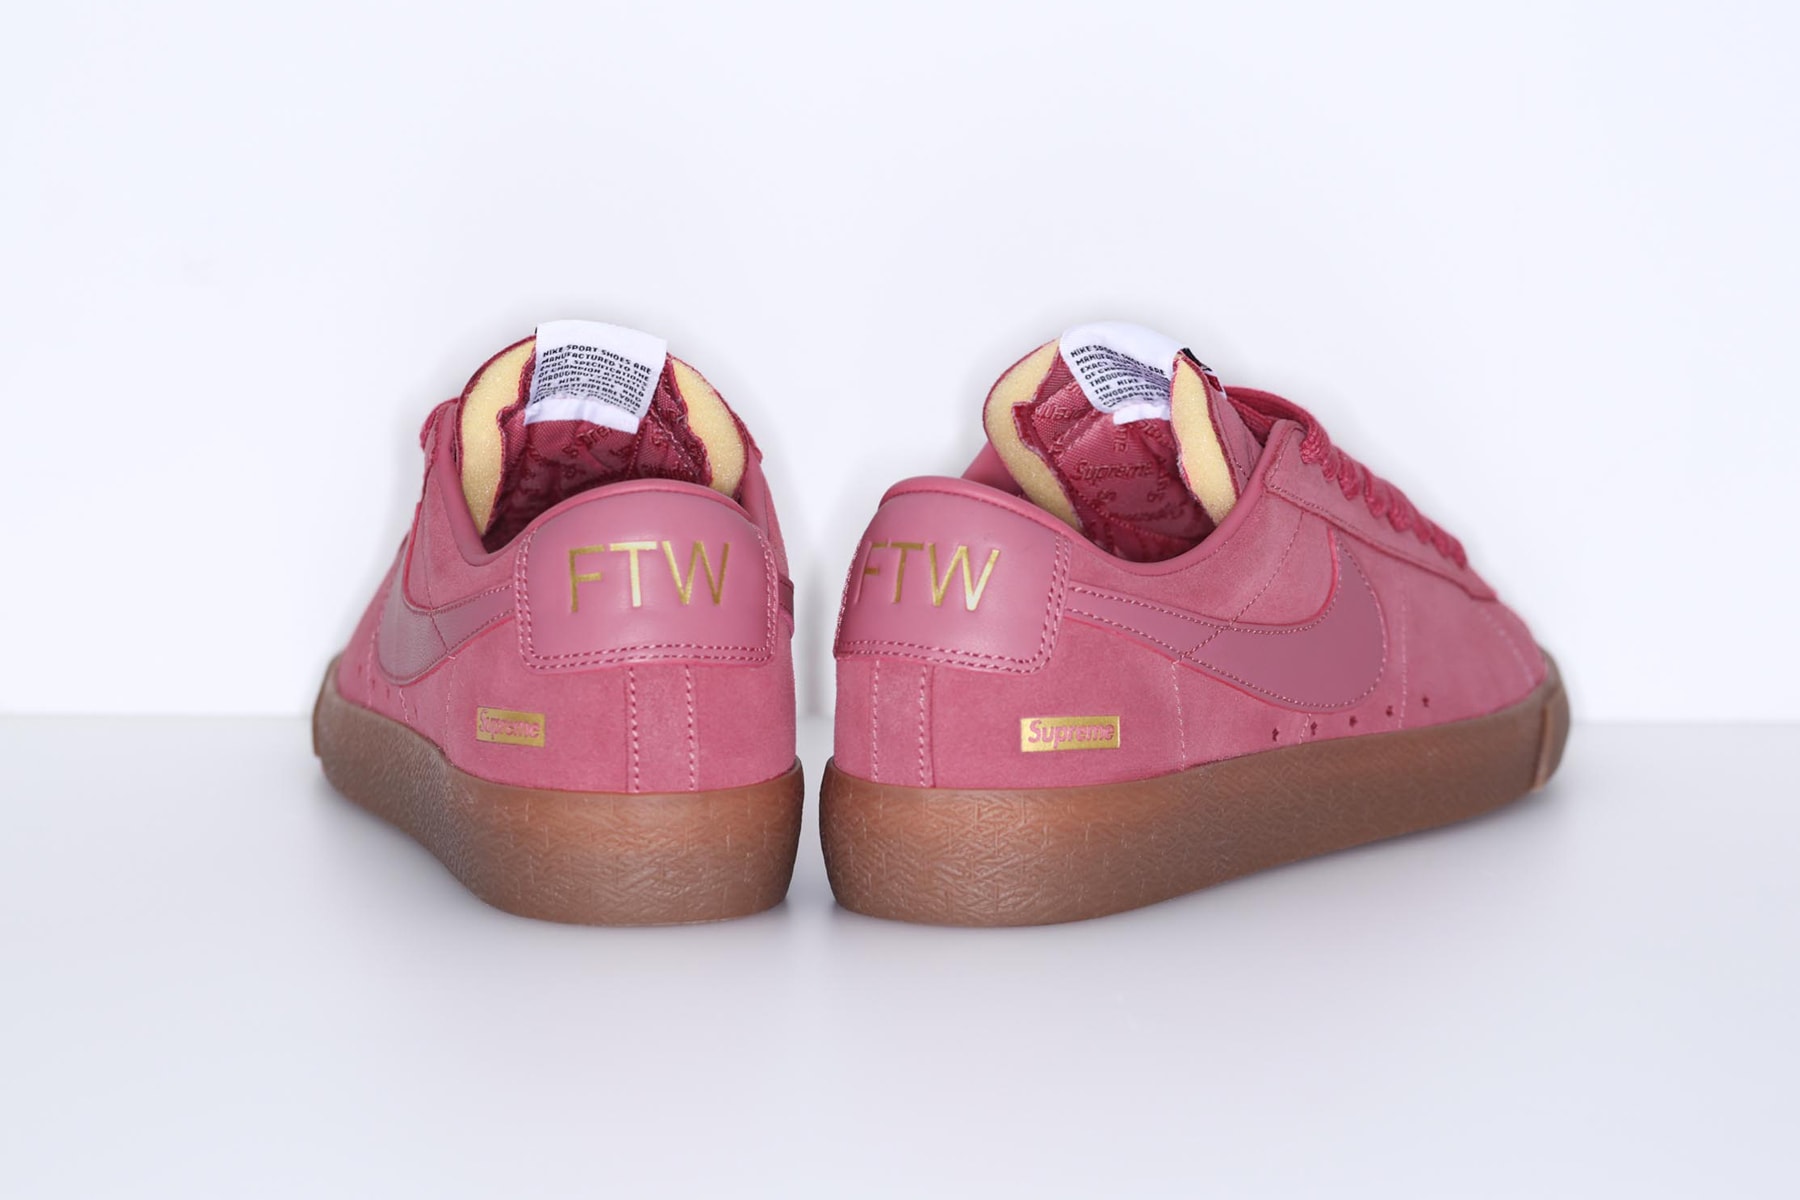 Supreme Nike SB Blazer Low GT pink brown teal gold sneakers